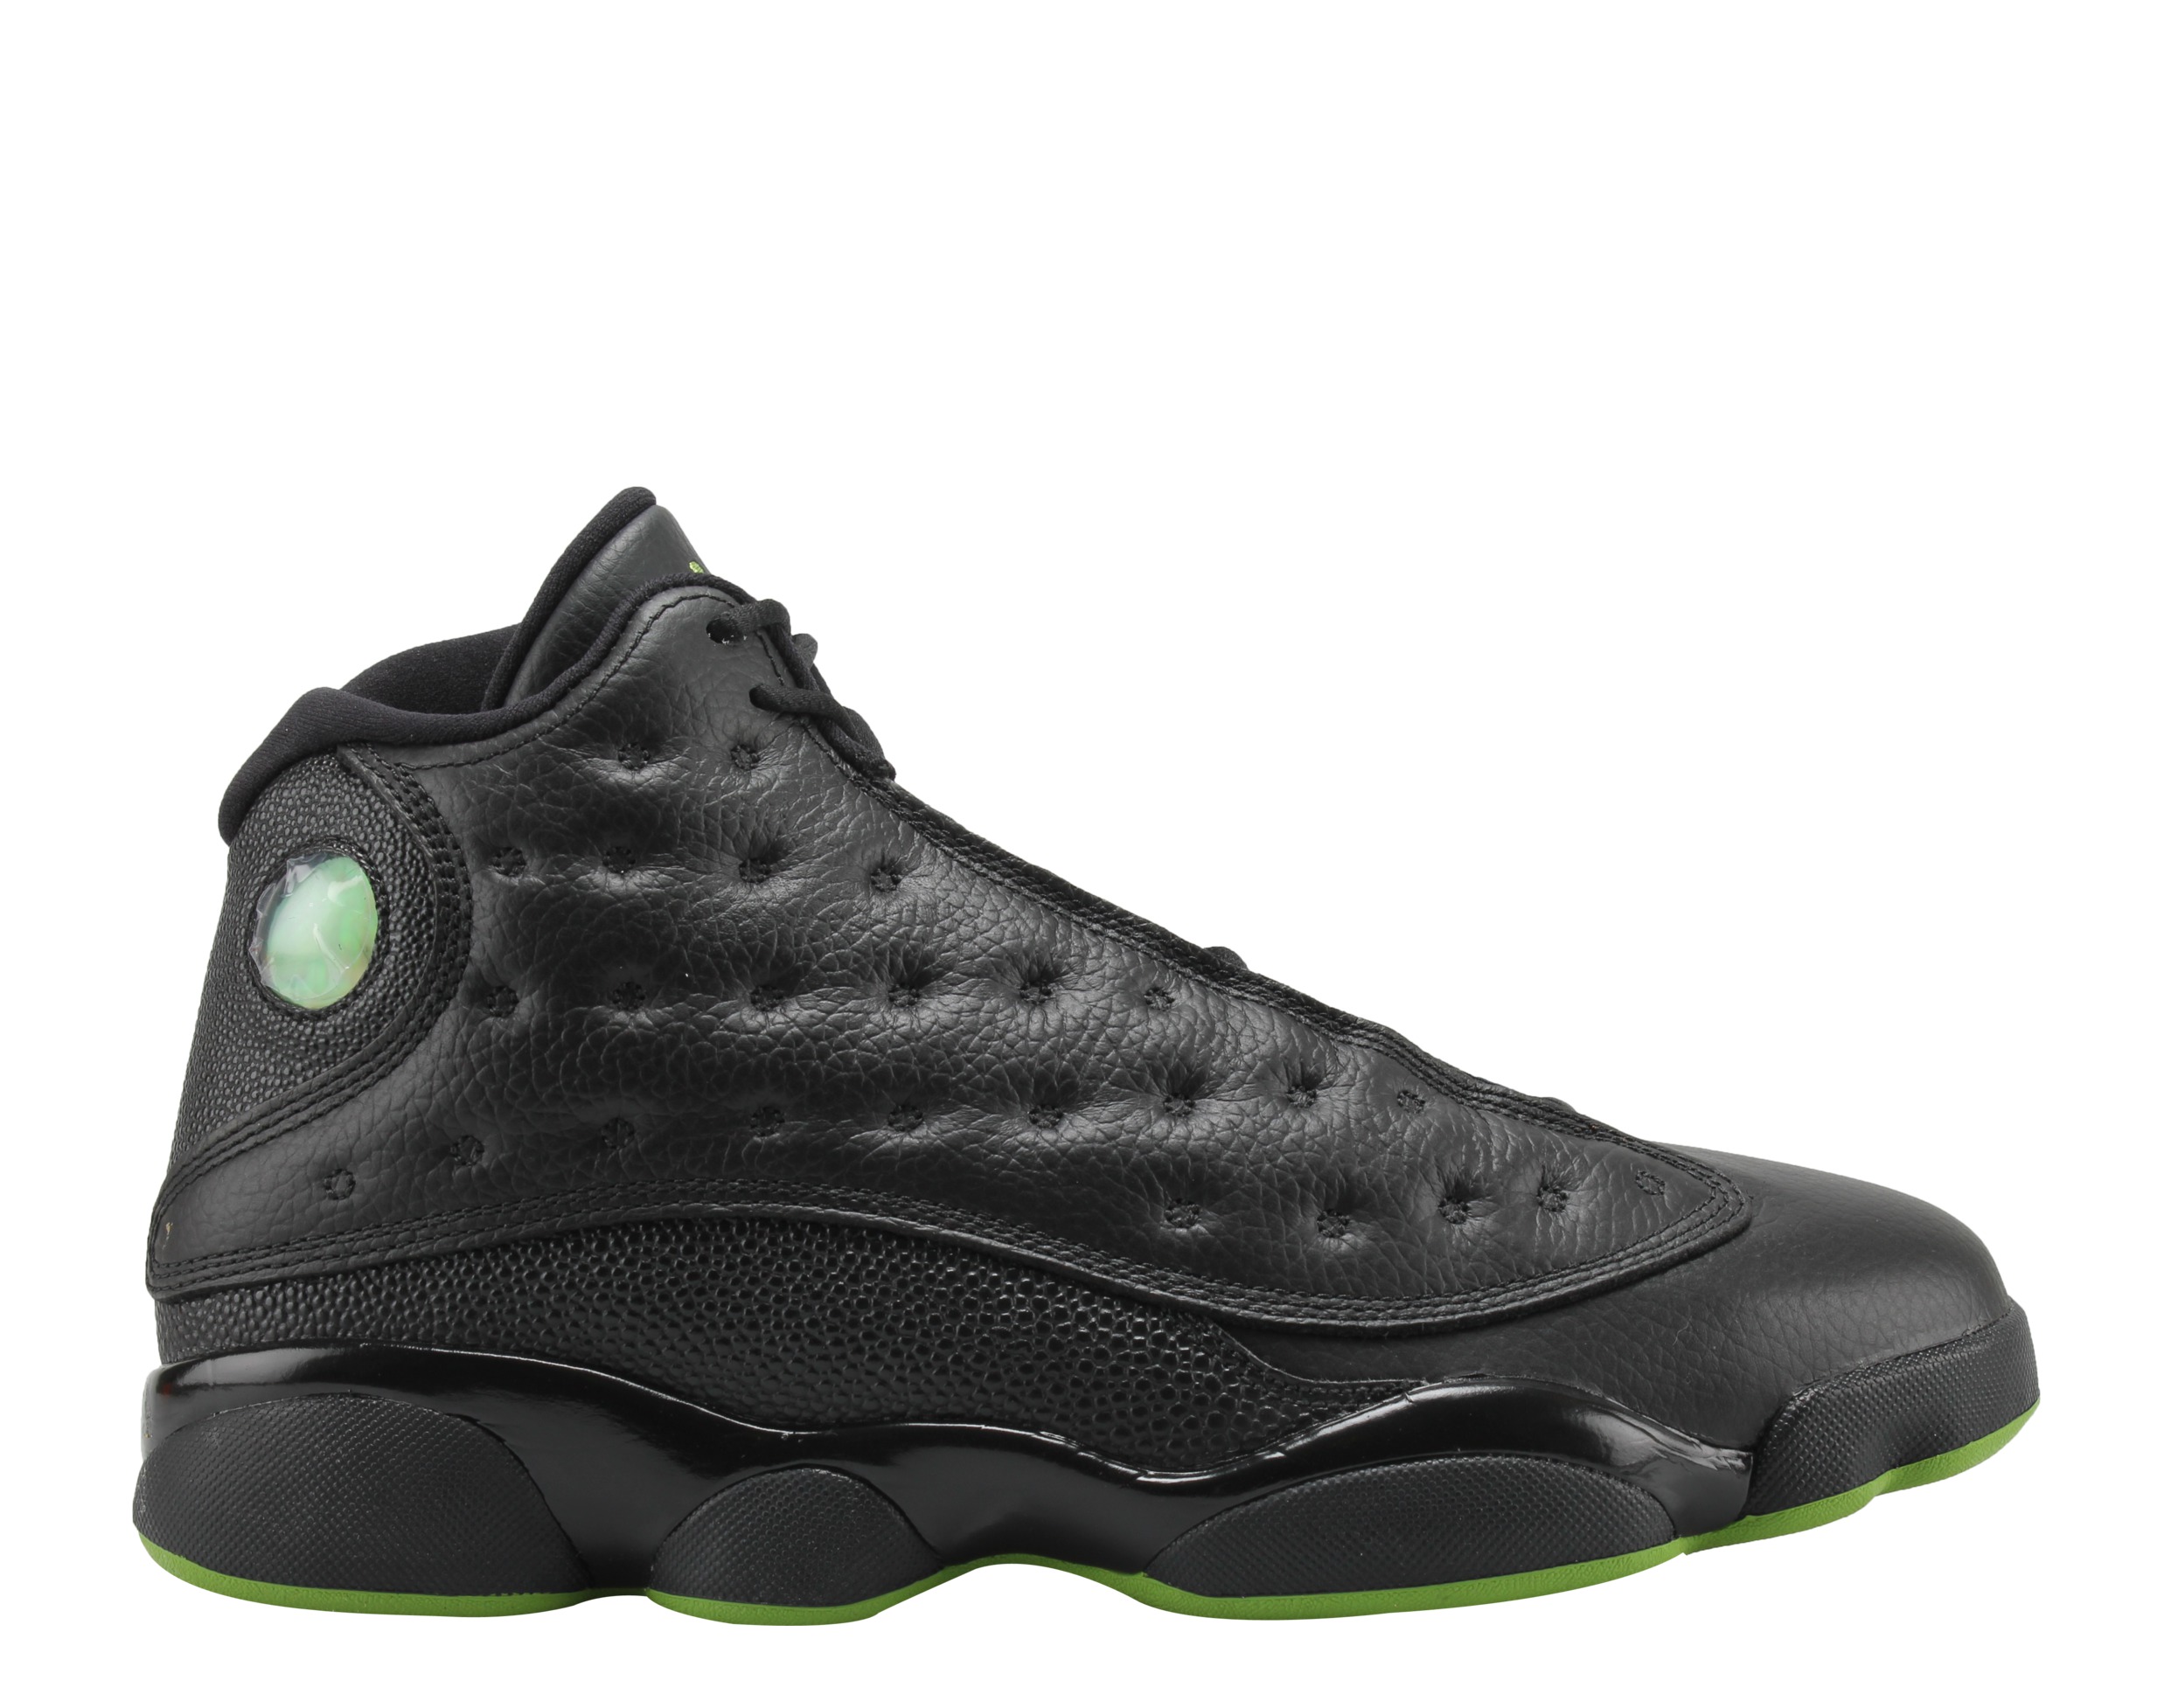 Nike Air Jordan 13 Retro Men's Basketball Shoes Size 11 - image 2 of 6